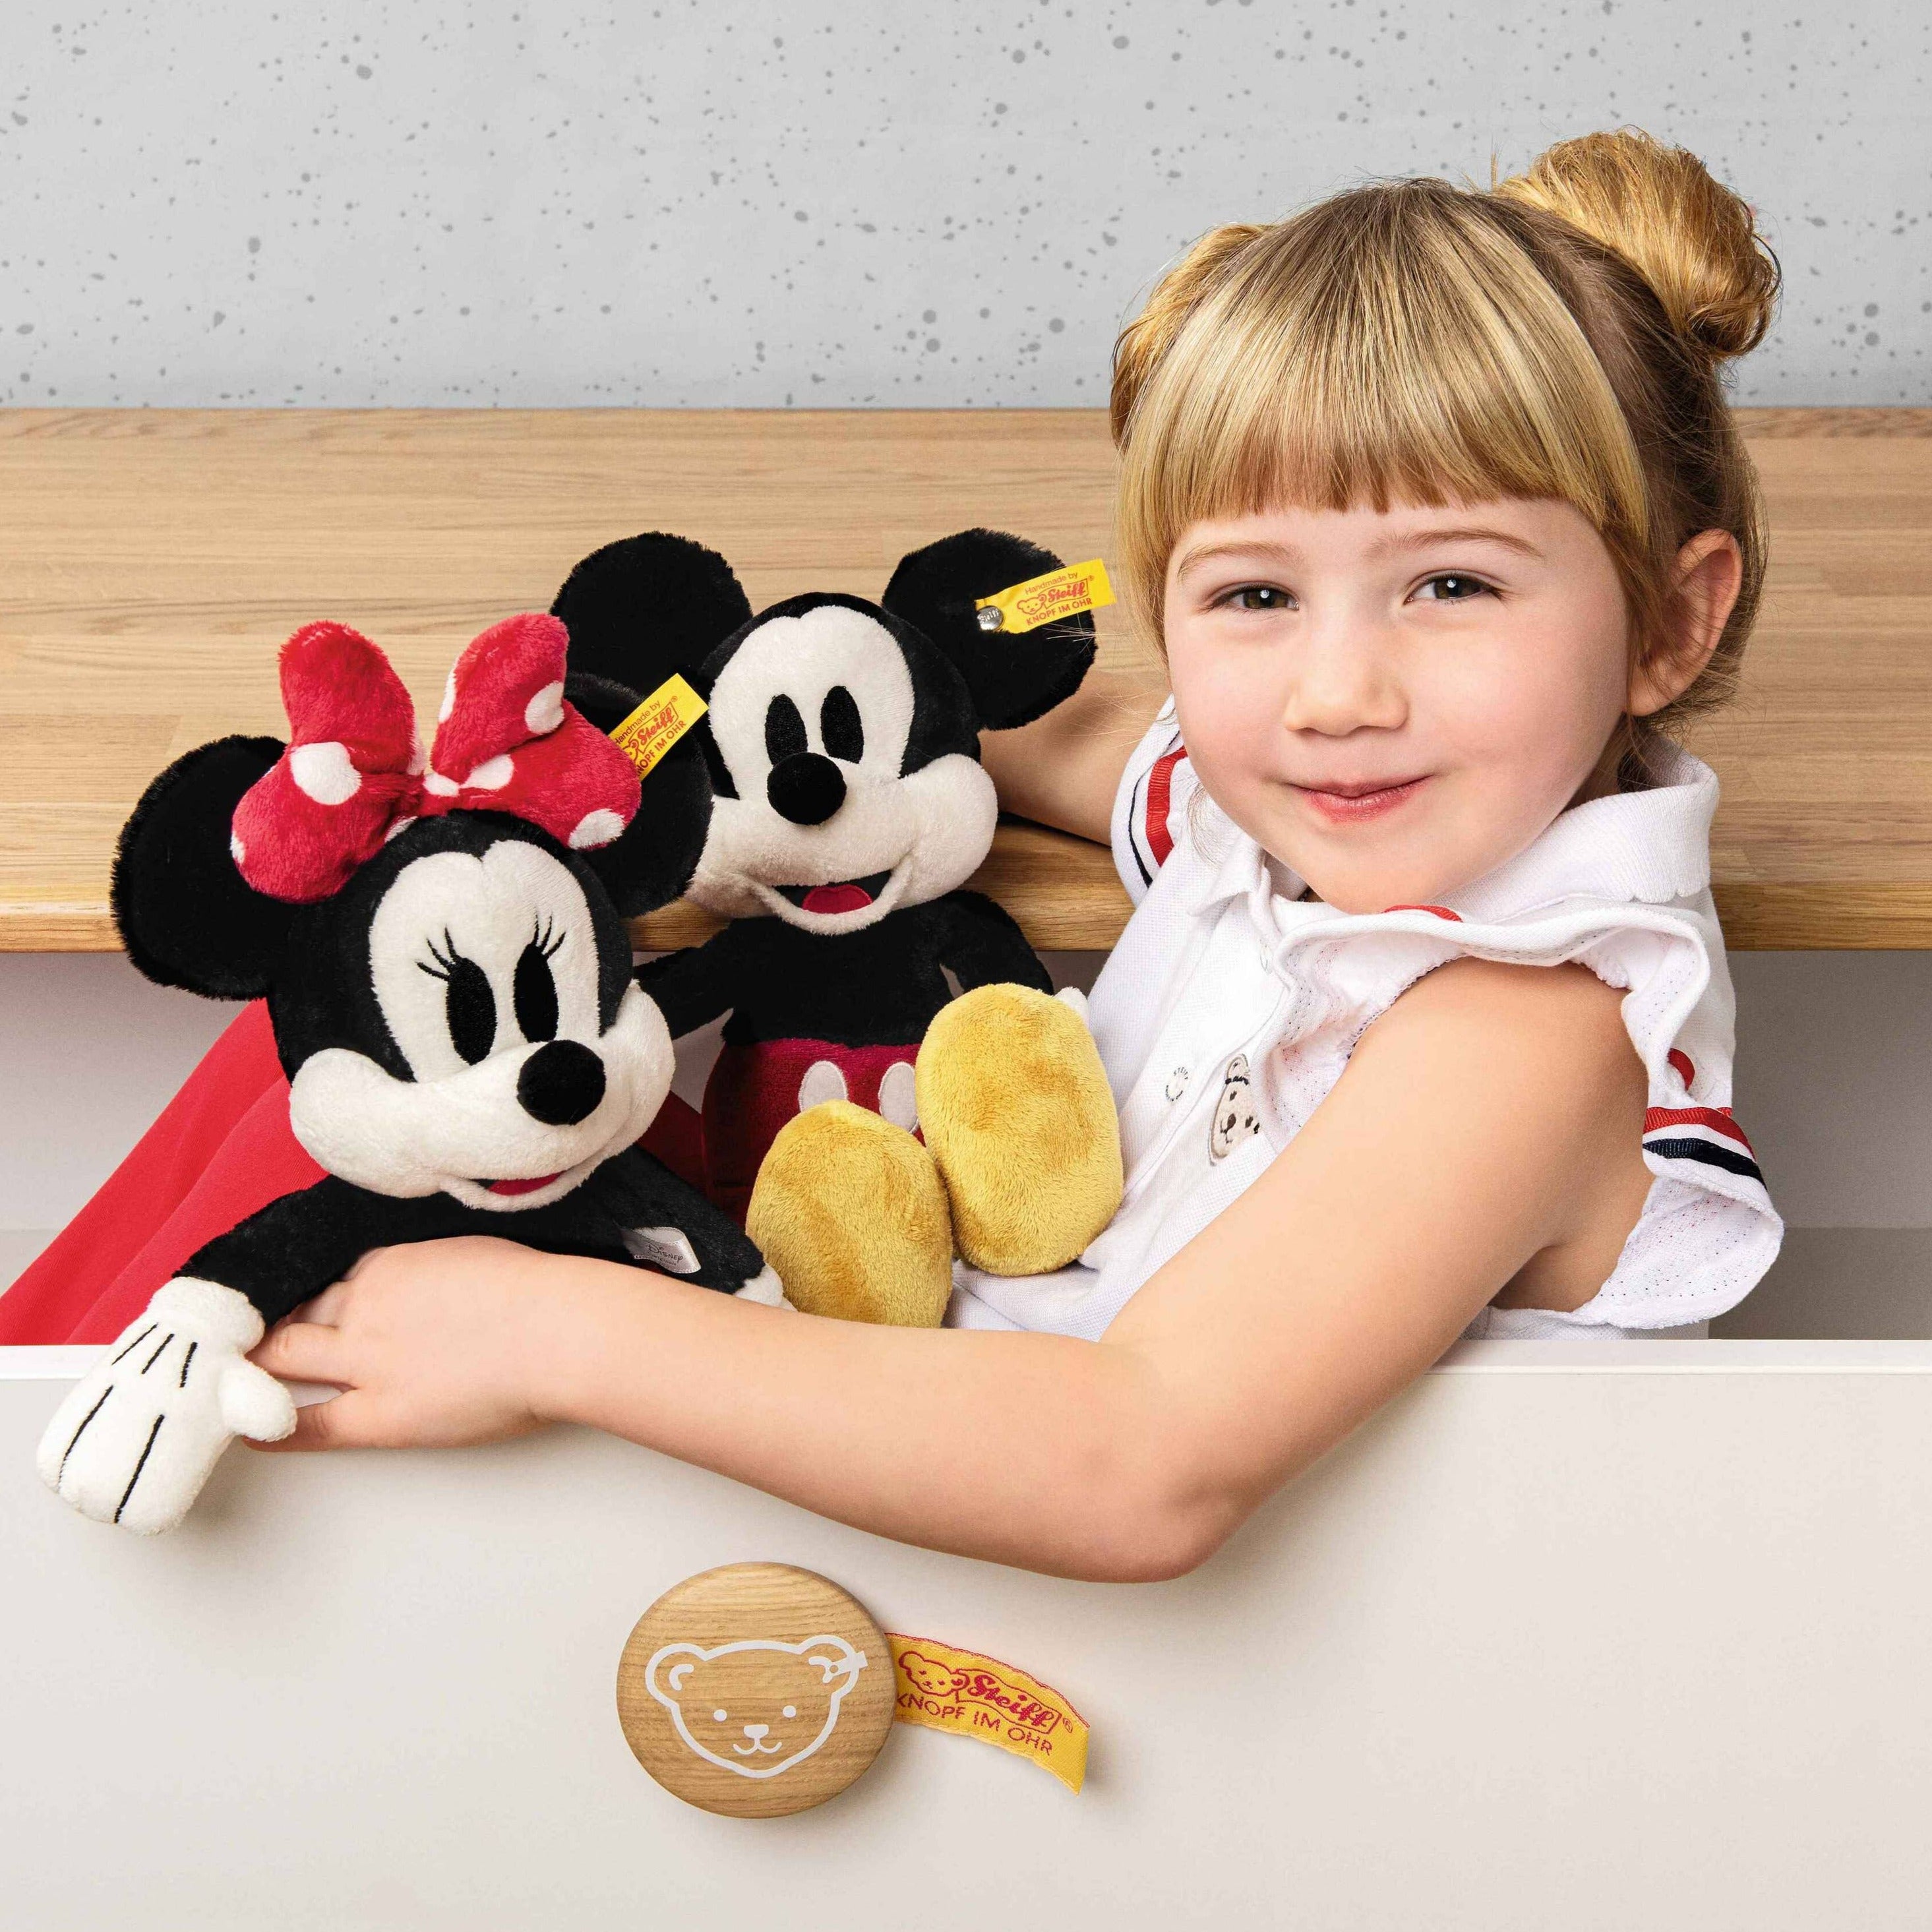 Disney's Mickey Mouse Stuffed Plush Toy